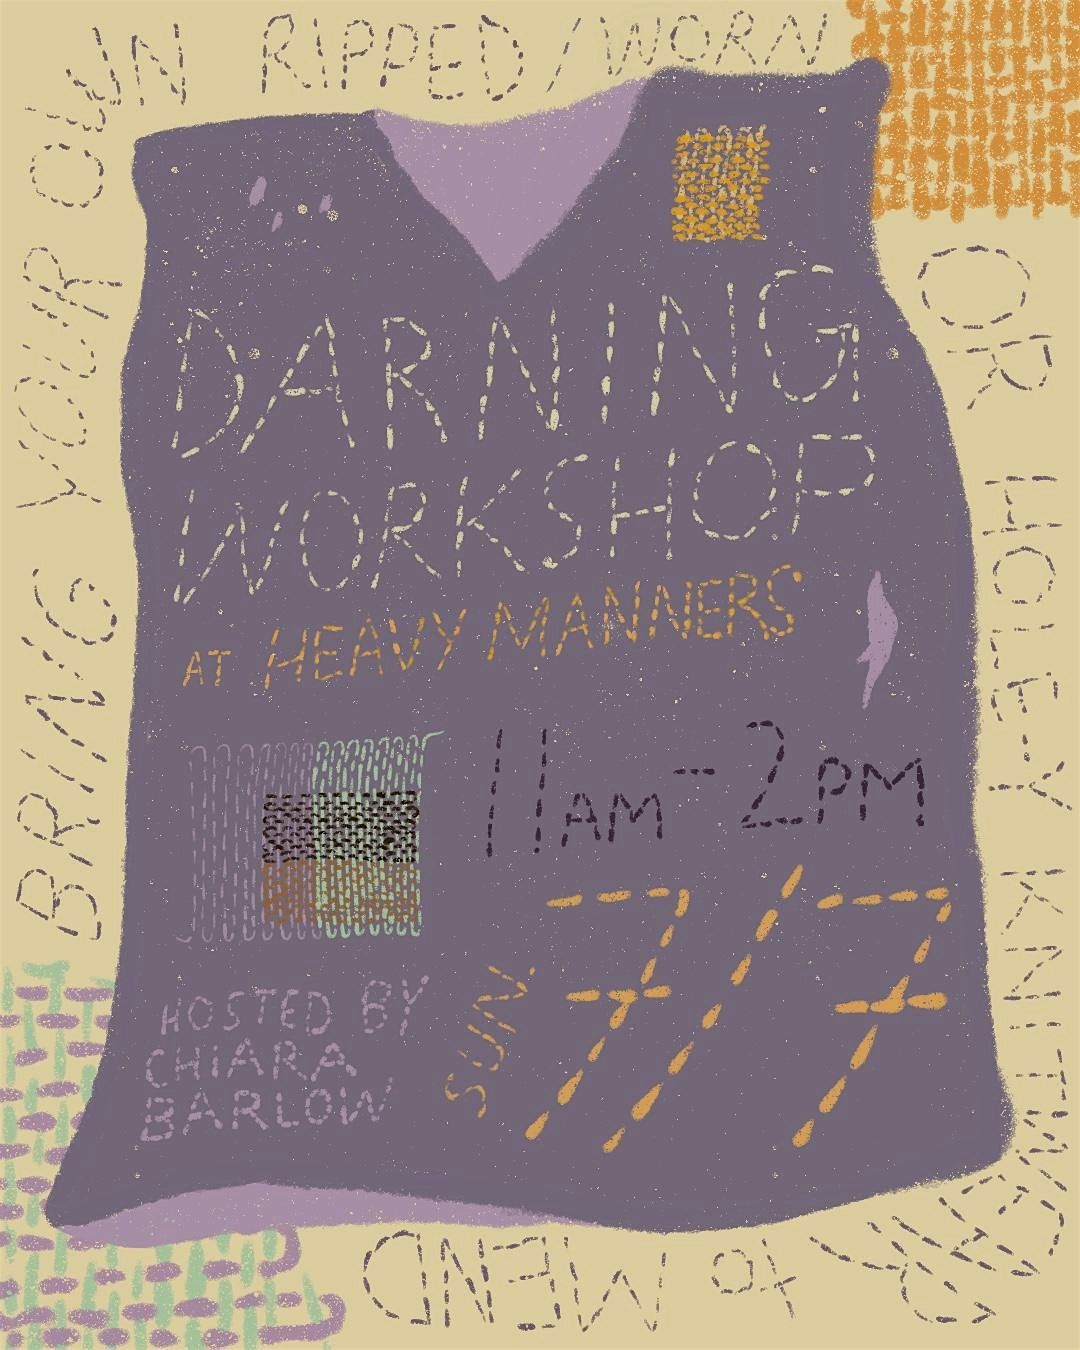 Darning Workshop Hosted by Chiara Barlow (7\/7)